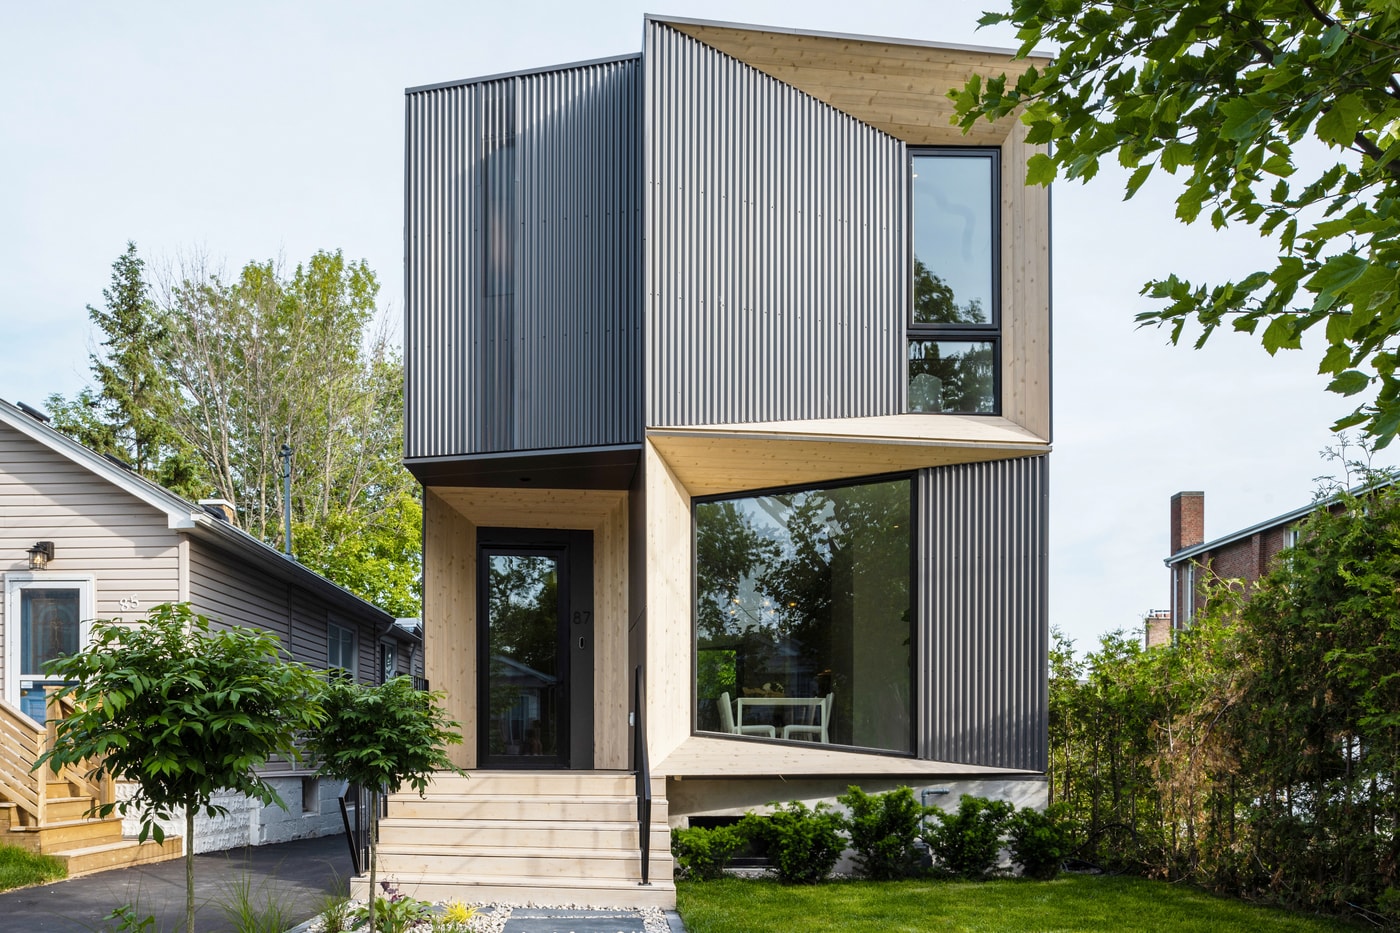 PHAEDRUS Studio's Tesseract House homes design architecture  